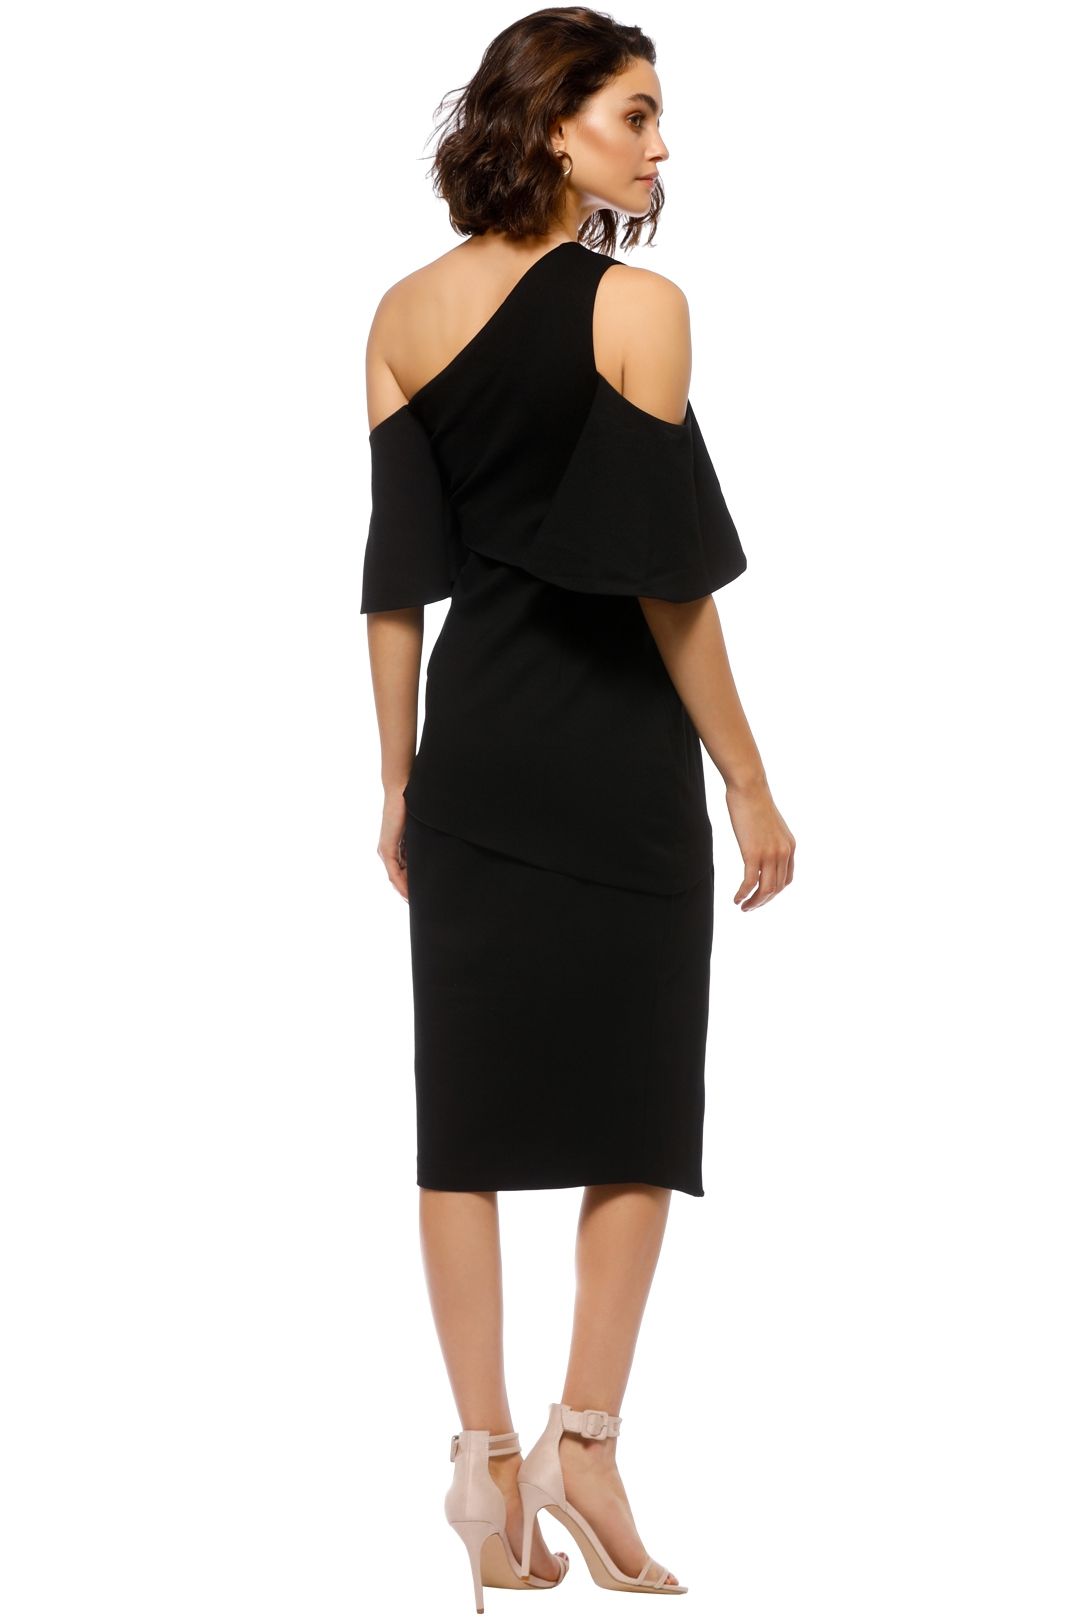 Elliatt - Octave Dress - Black - Back